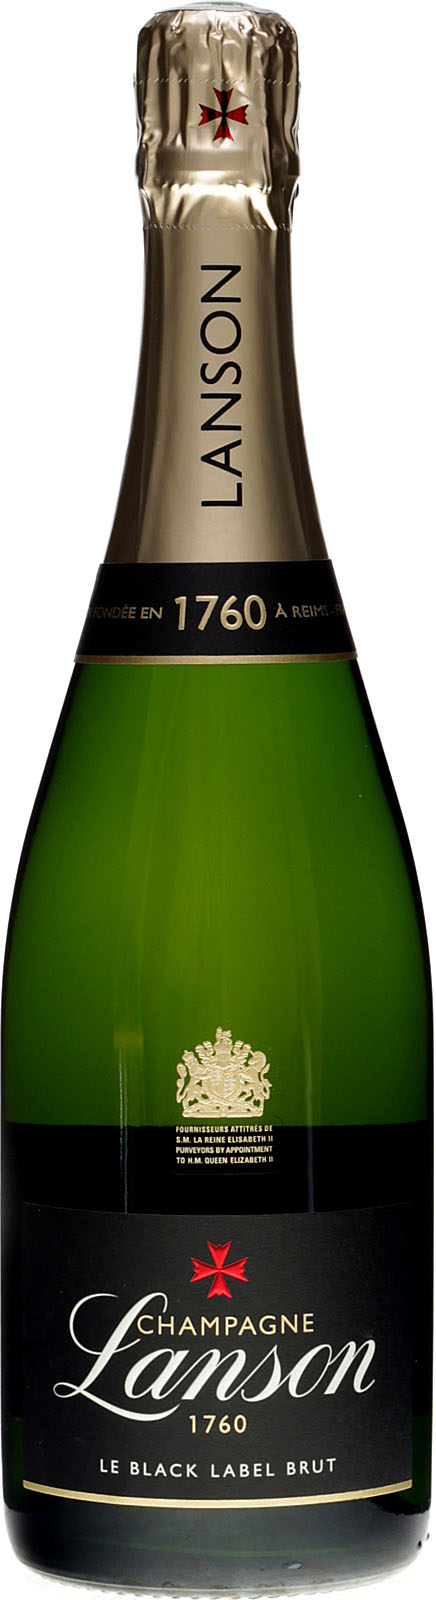 Lanson Black Label 0,75 Liter dem Lanson Champagne aus